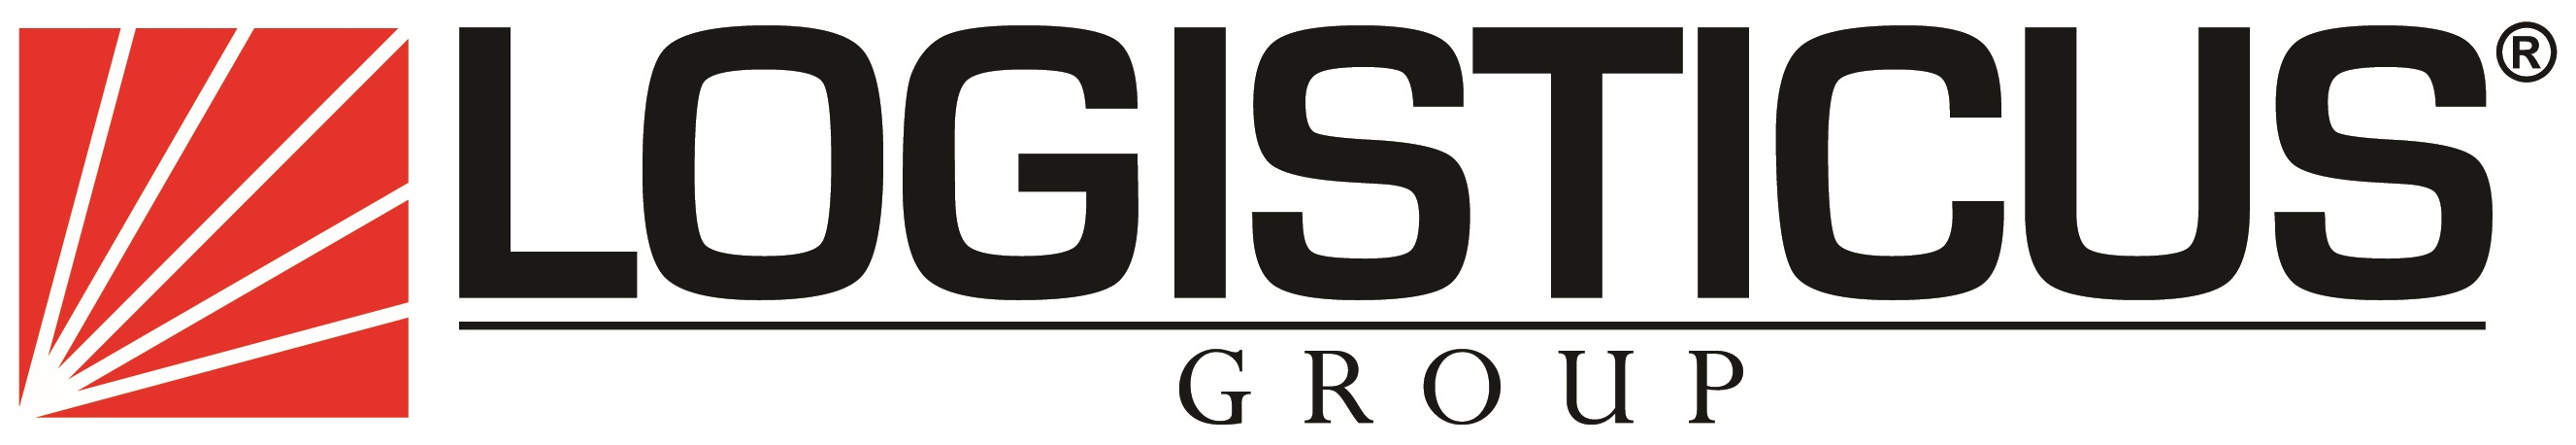 Logisticus Group Company Logo